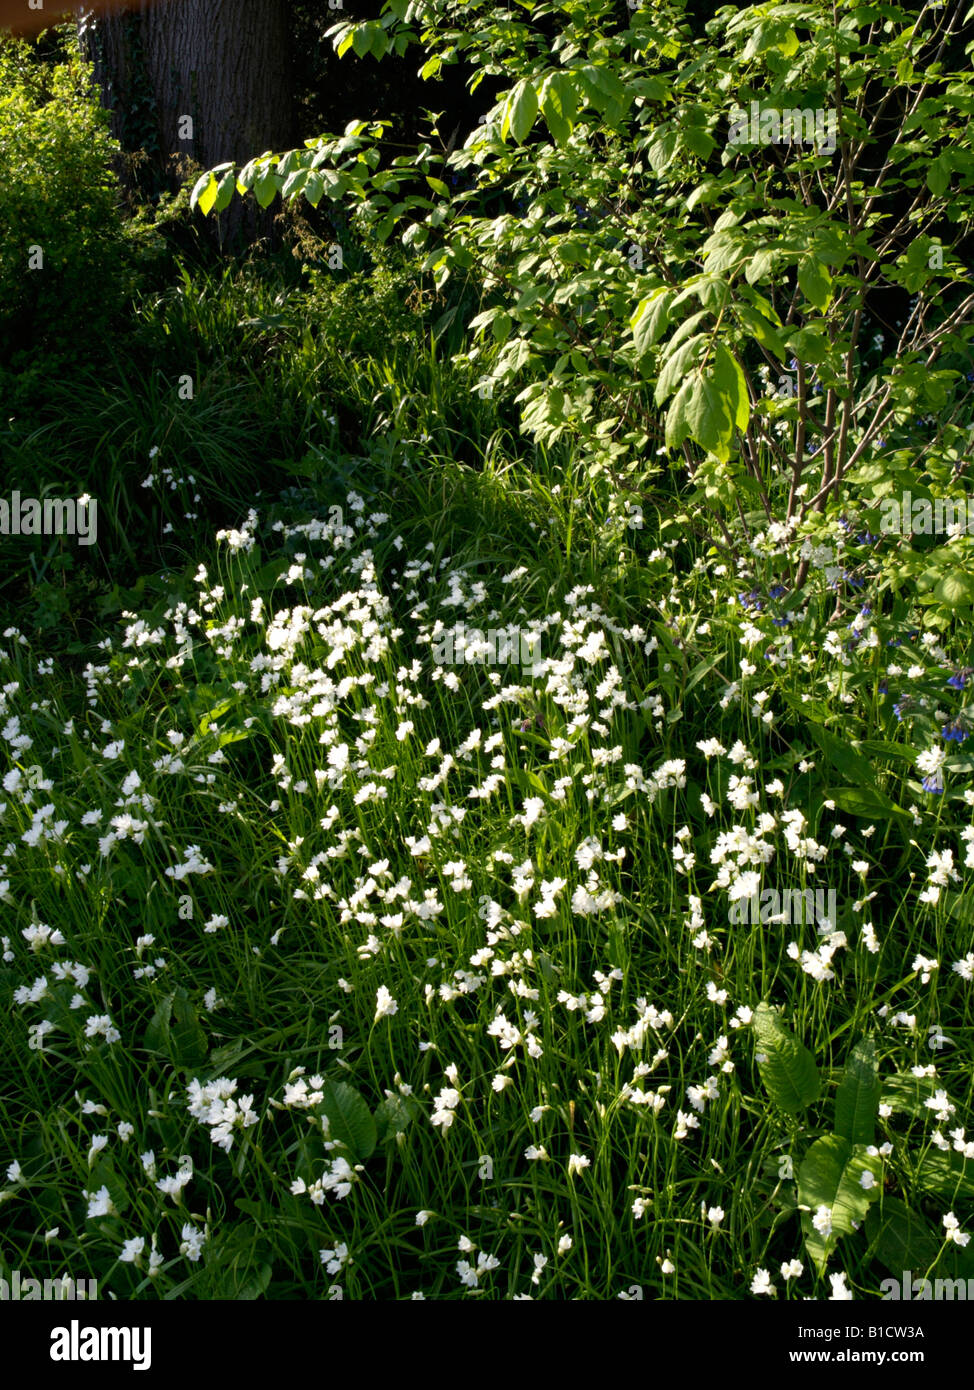 Allium zebdanense syn. Allium neapolitanum Stock Photo